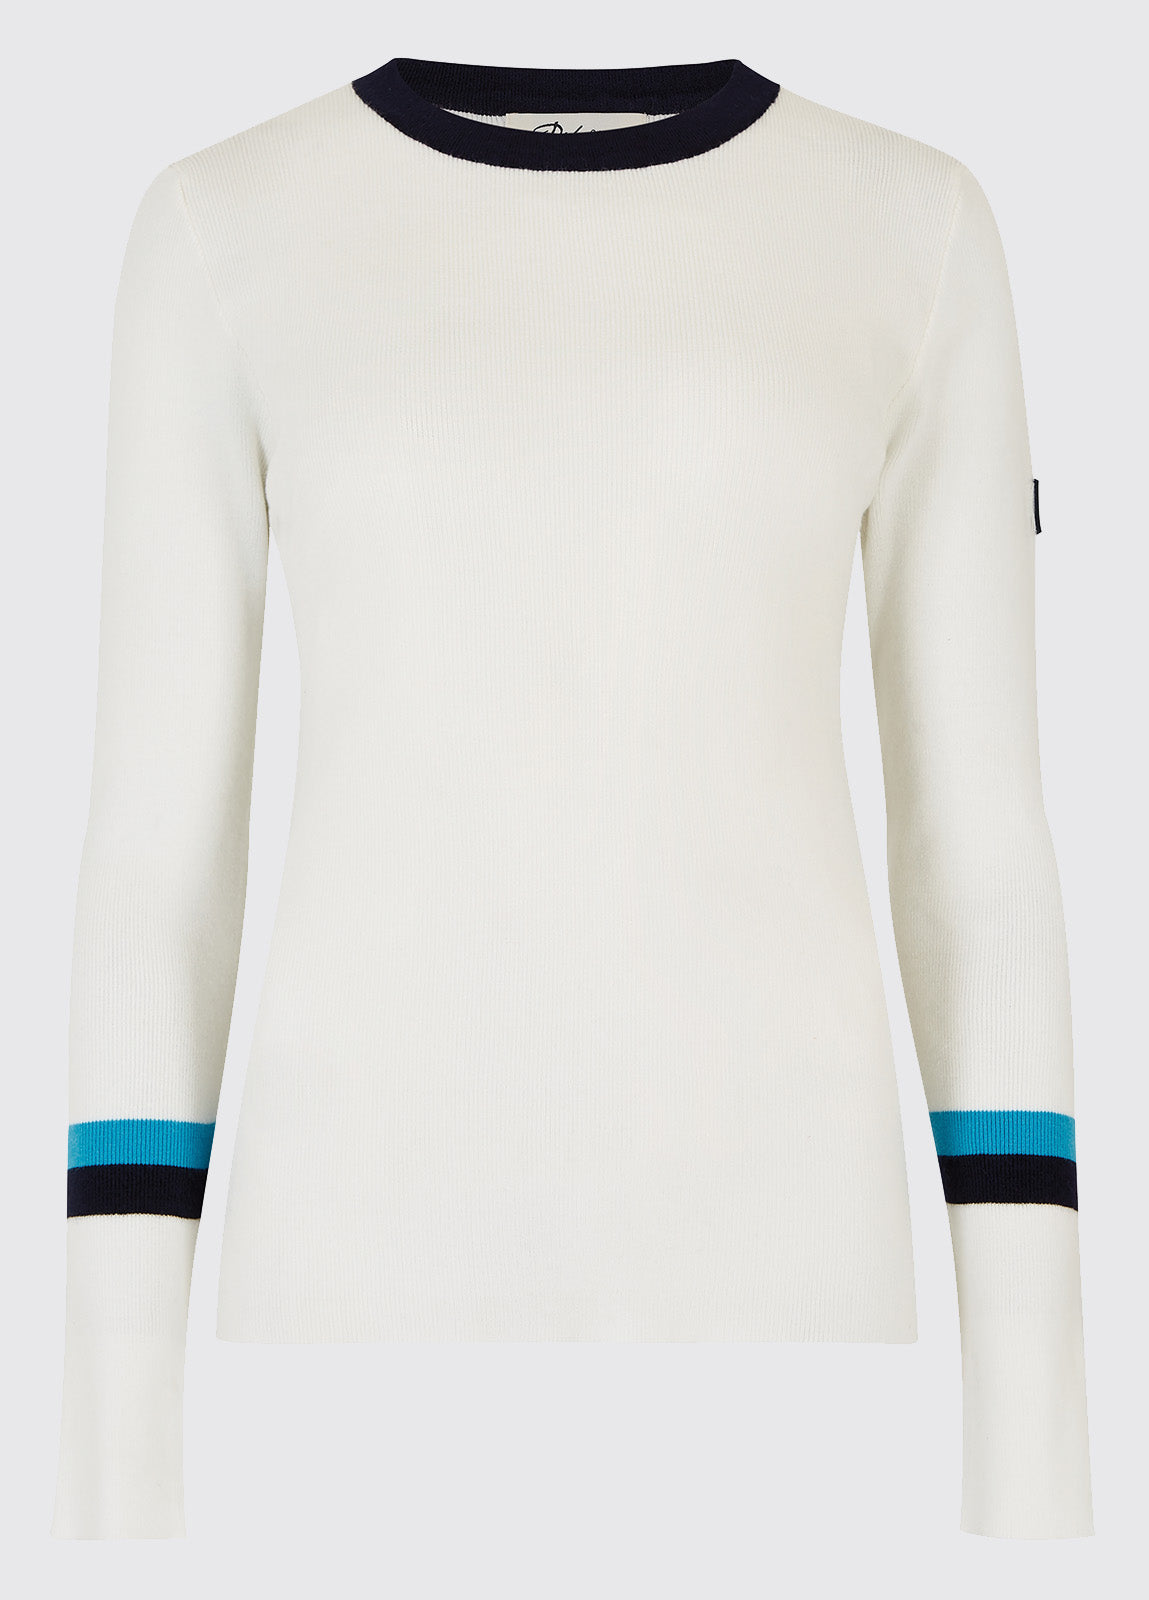 Tolka Sweater - White Multi